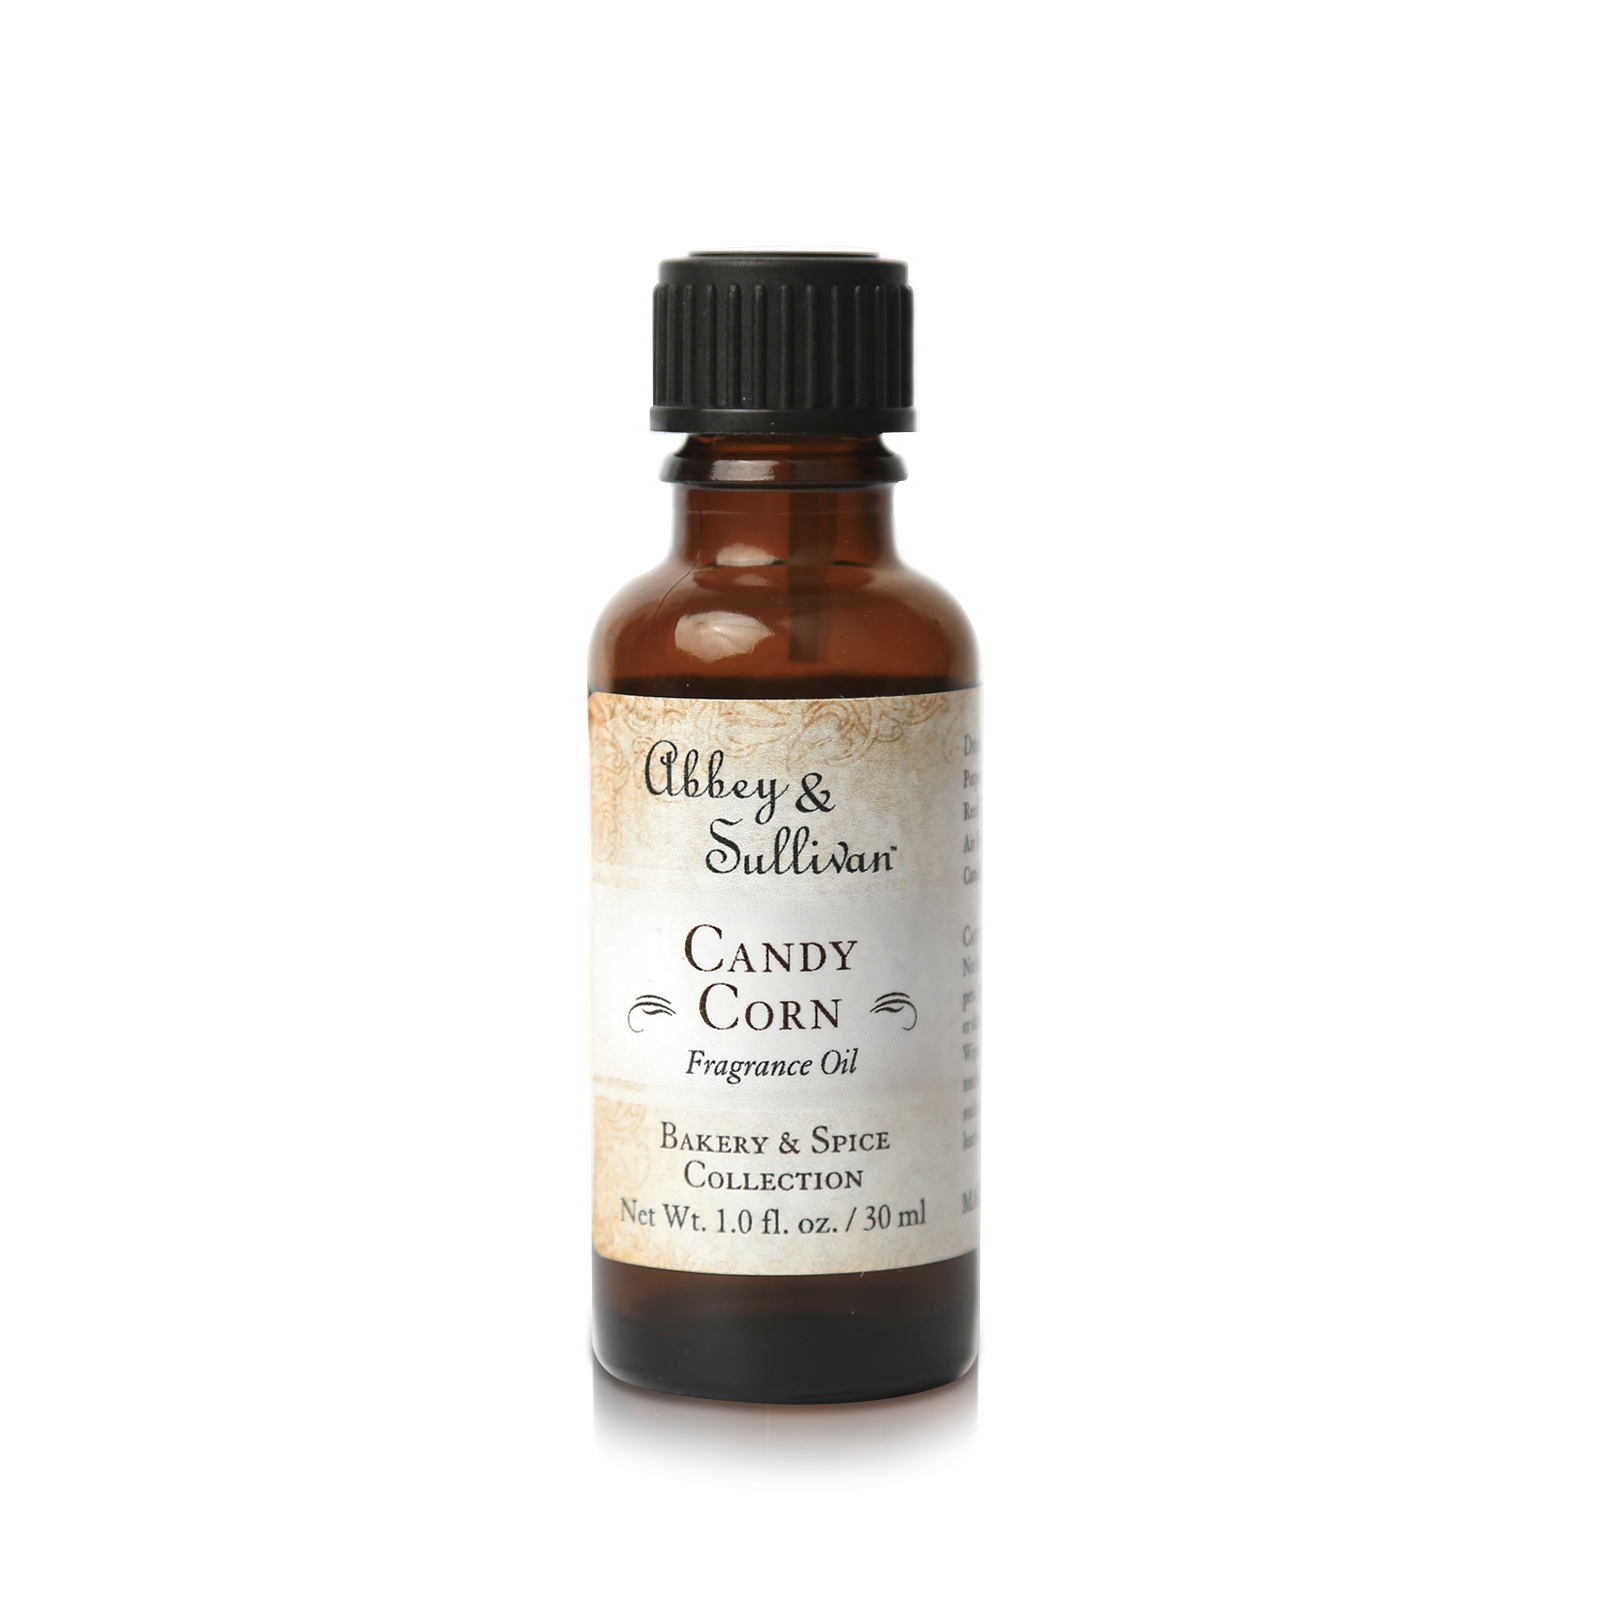 Fragrance Oil, Candy Corn 4.99 – Abbey & Sullivan